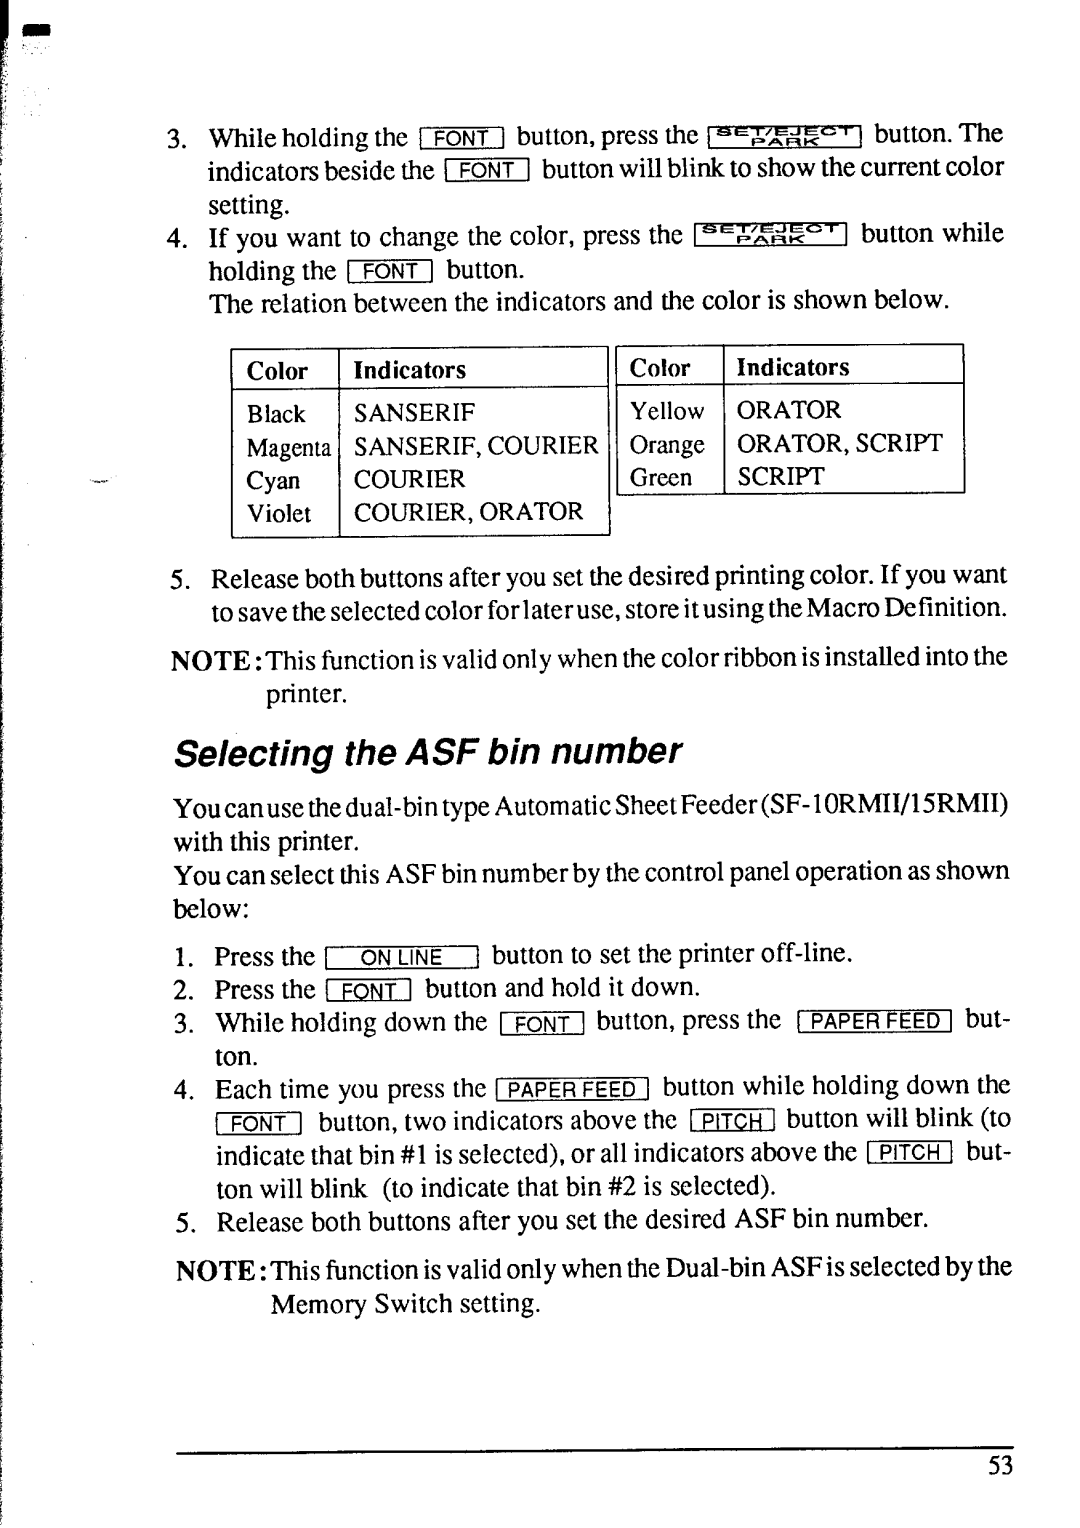 Star Micronics XR-1520, XR-1020 manual Selecting the ASF bin number, Color Indicators 